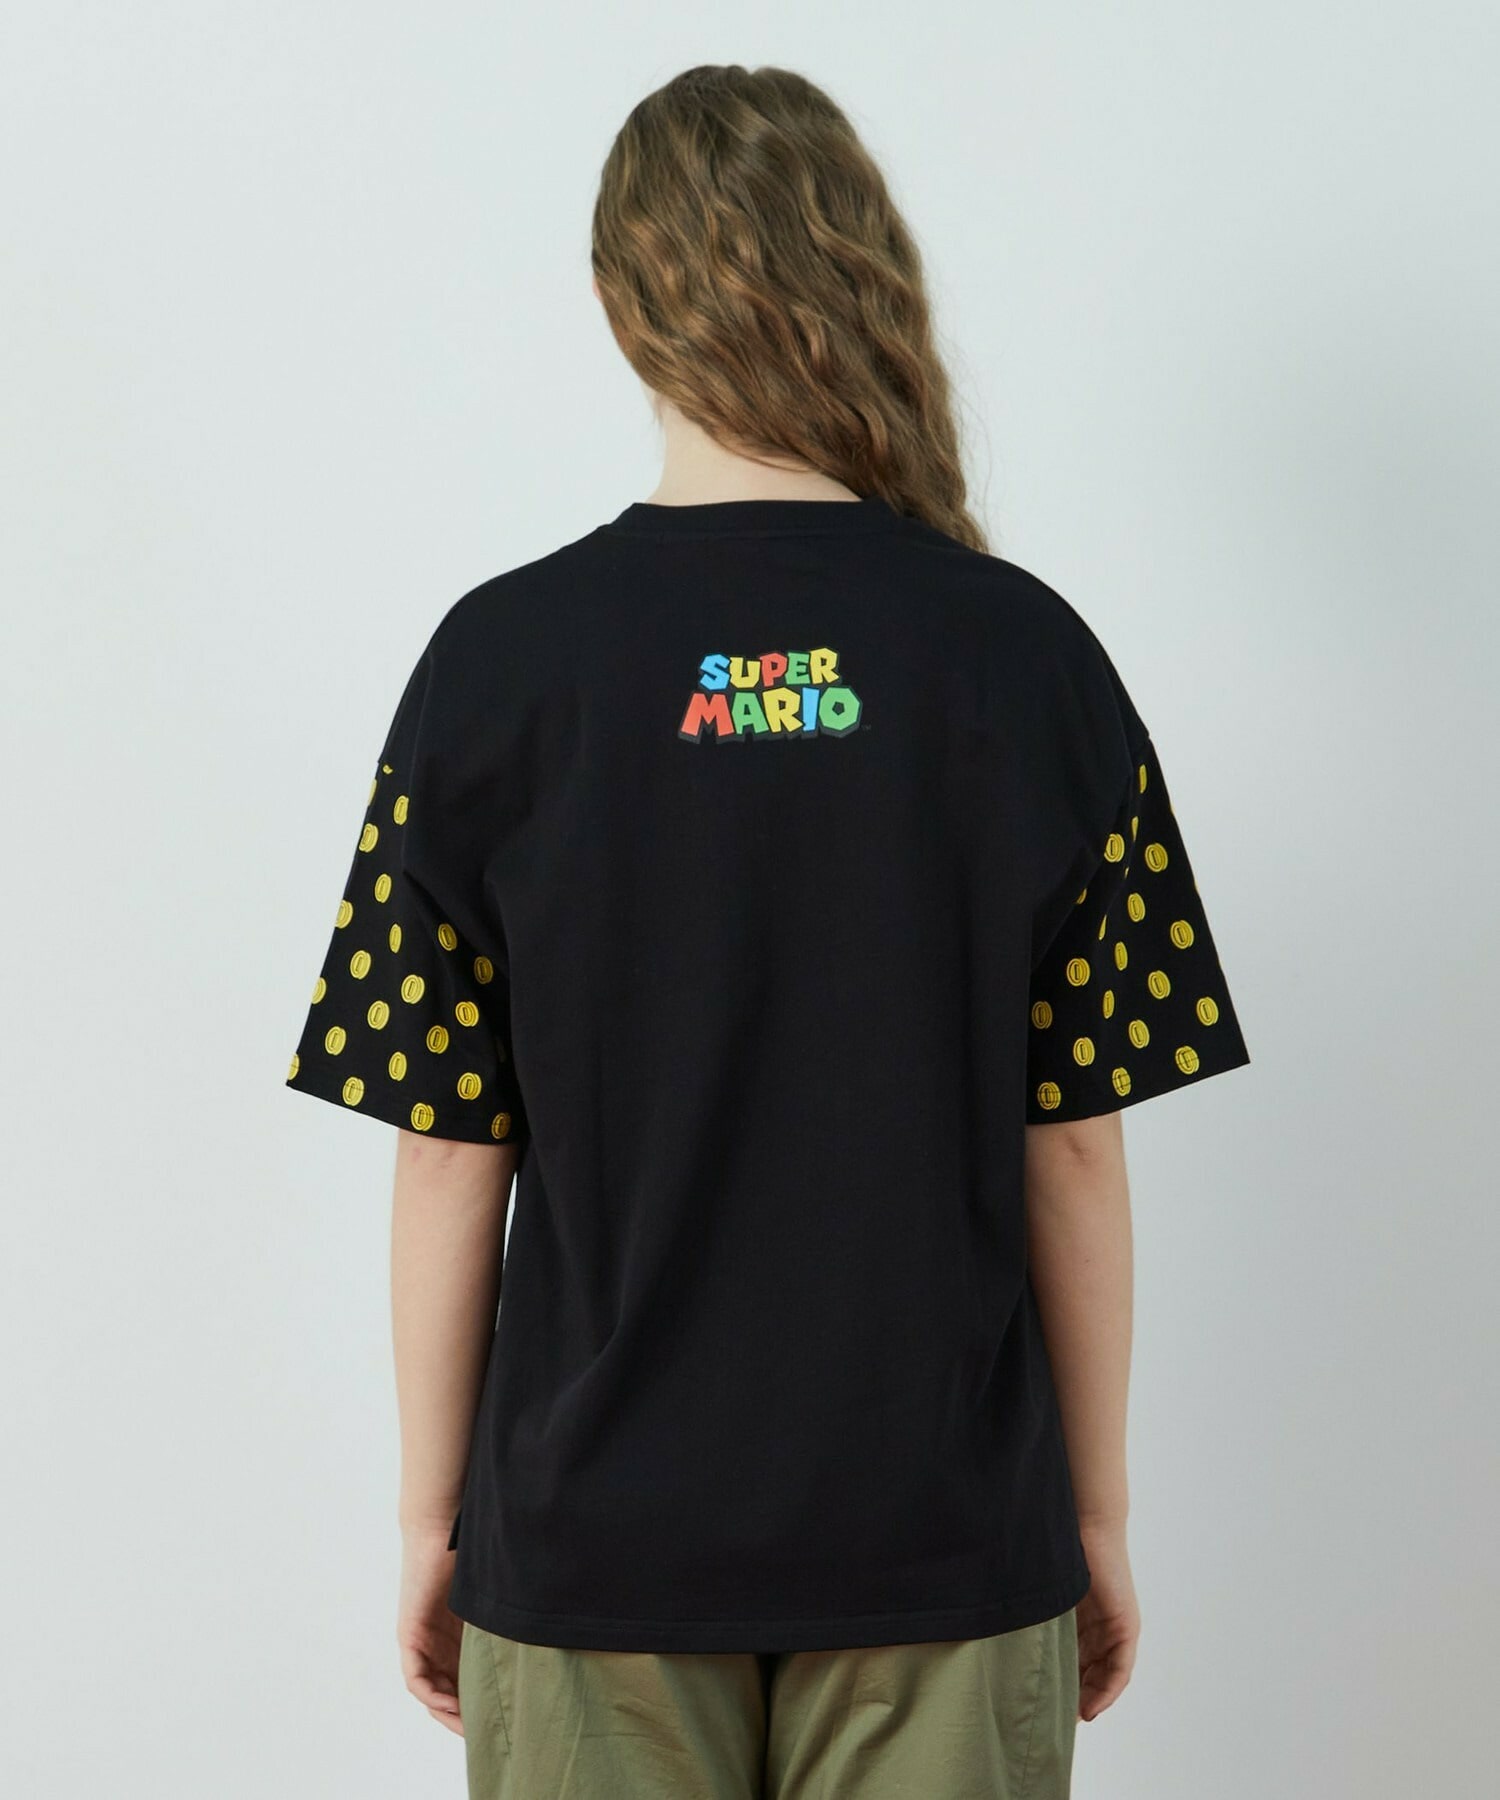 【FRAPBOIS】スーパーマリオ 限定商品 Tシャツ 詳細画像 ブラック 9